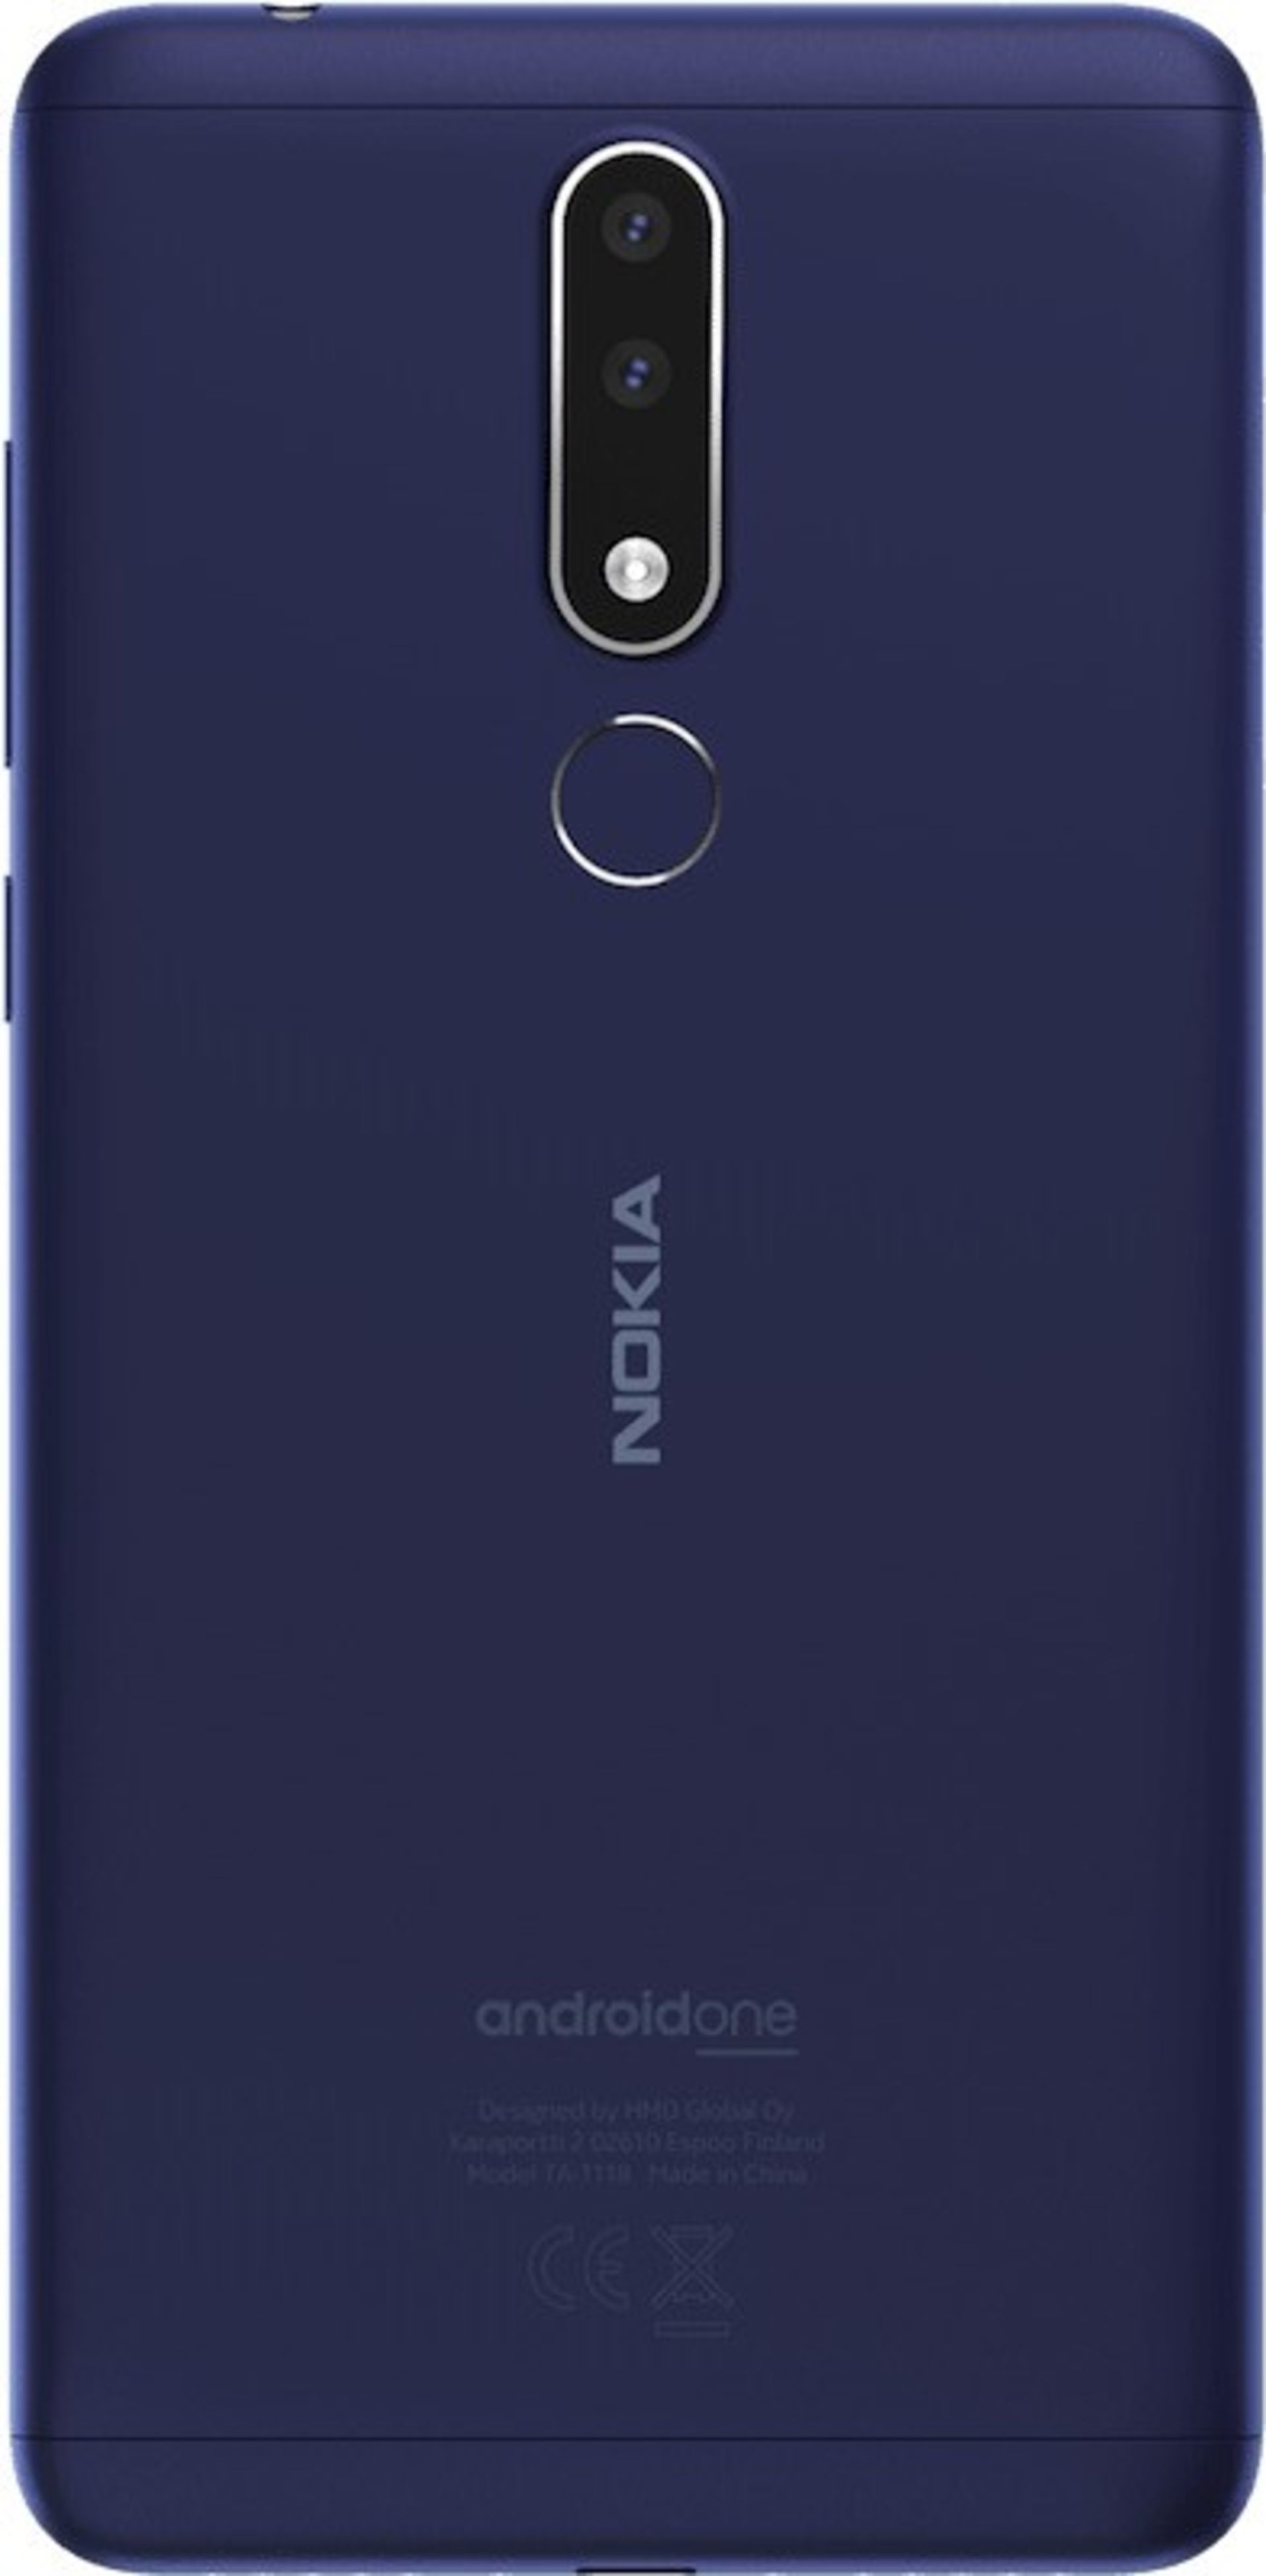 نوکیا 3.1 پلاس / Nokia 3.1 Plus